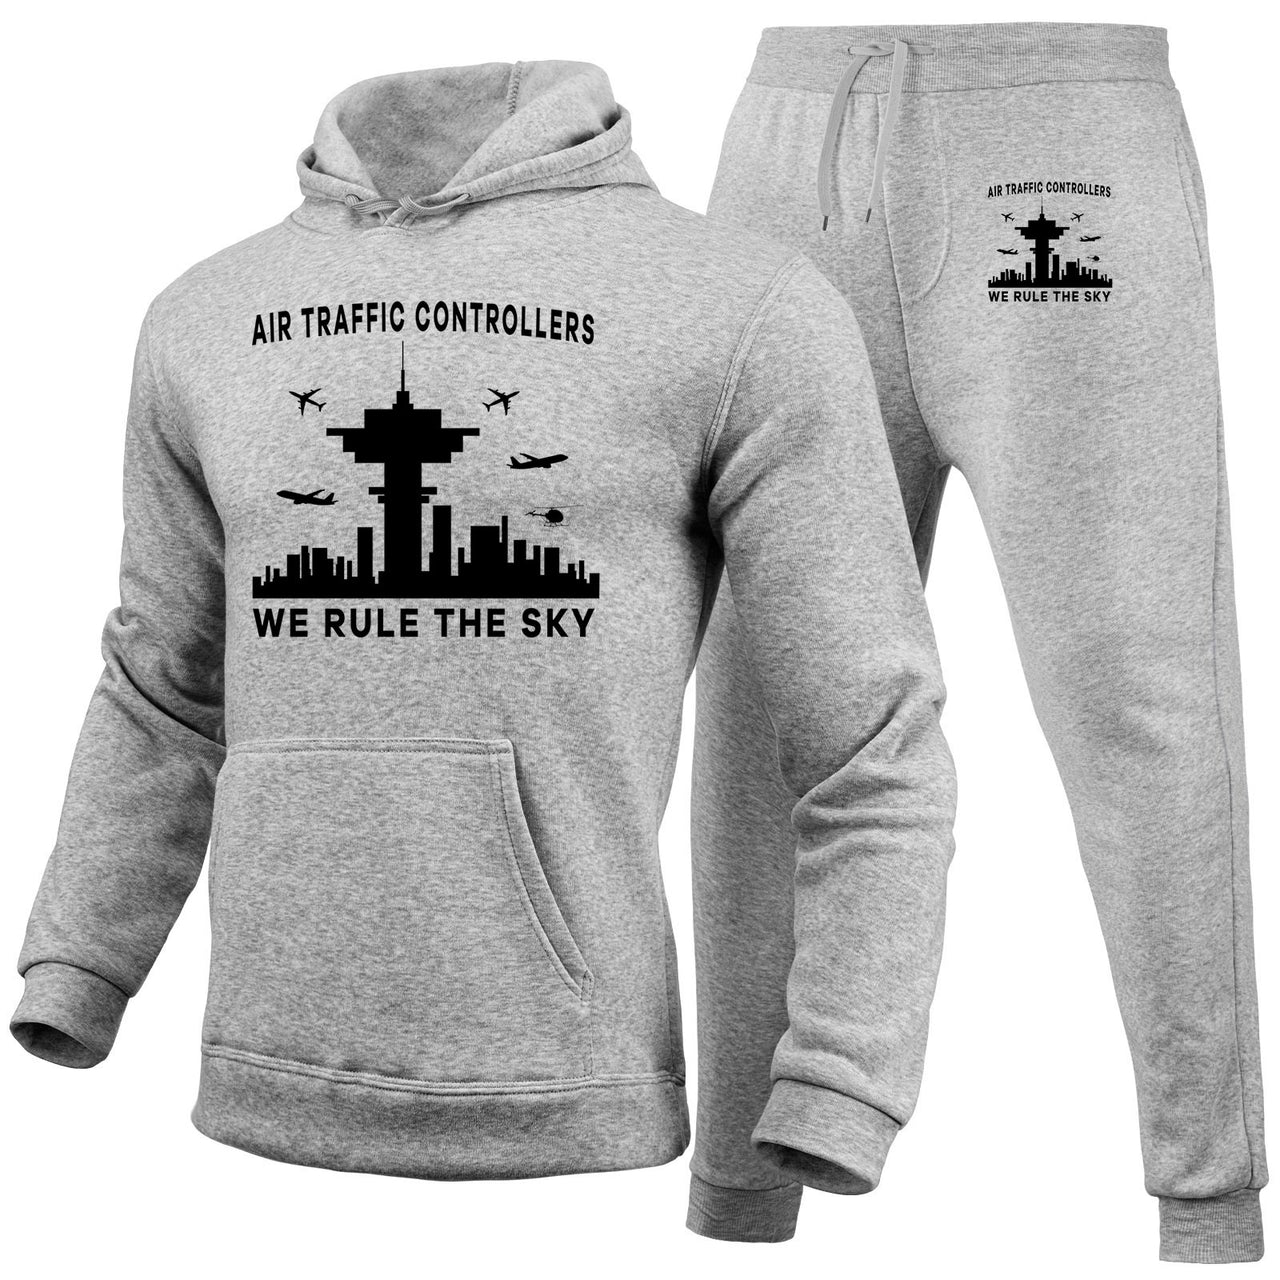 Air Traffic Controllers - We Rule The Sky Designed Hoodies & Sweatpants Set